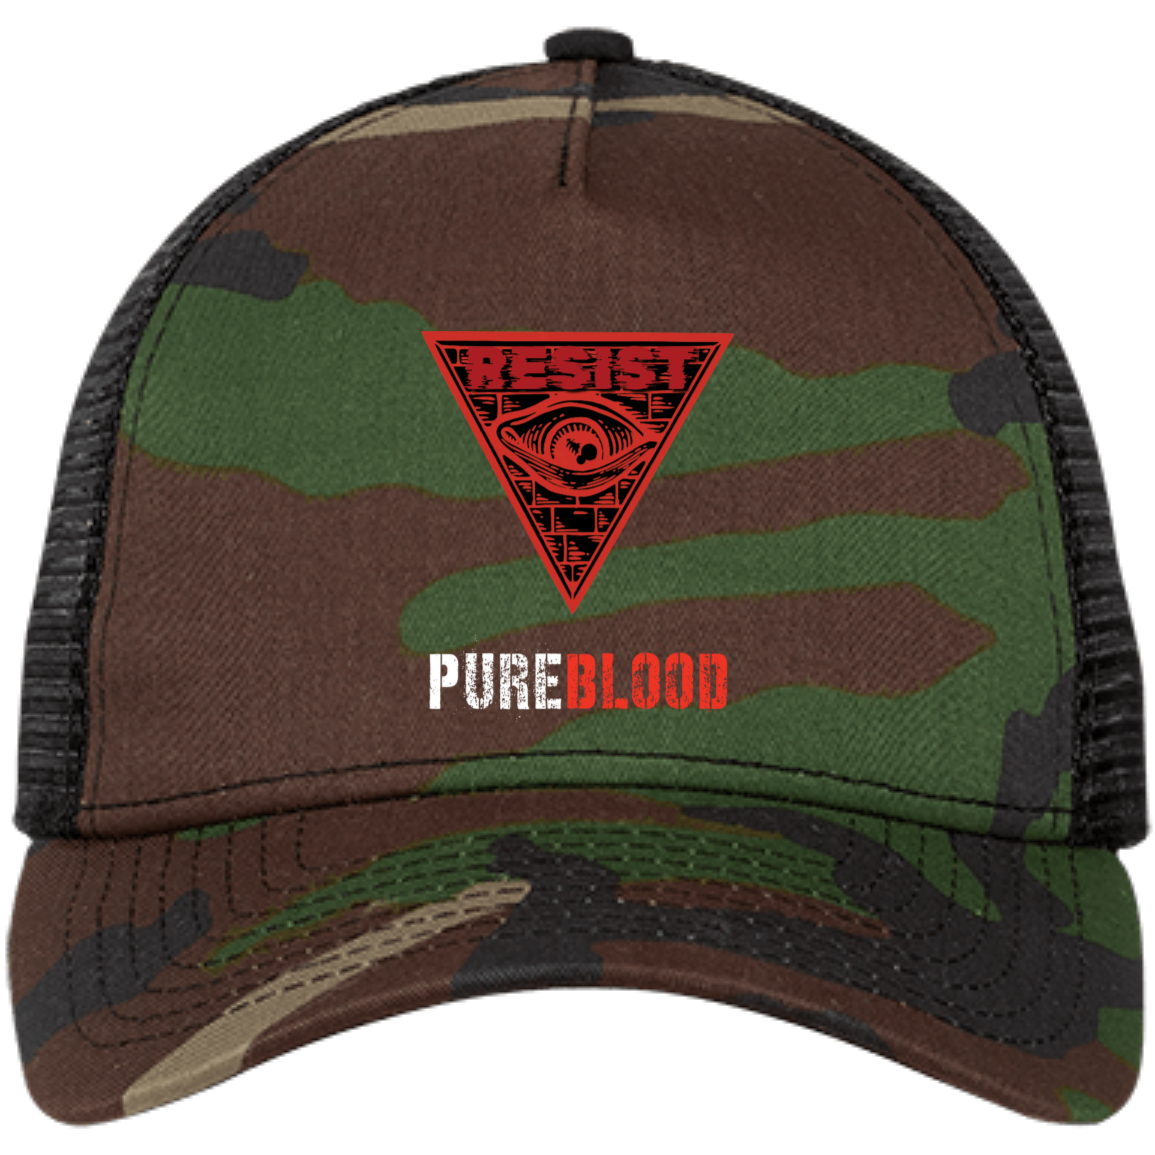 "PureBlood" Embroidered Snapback Trucker Cap